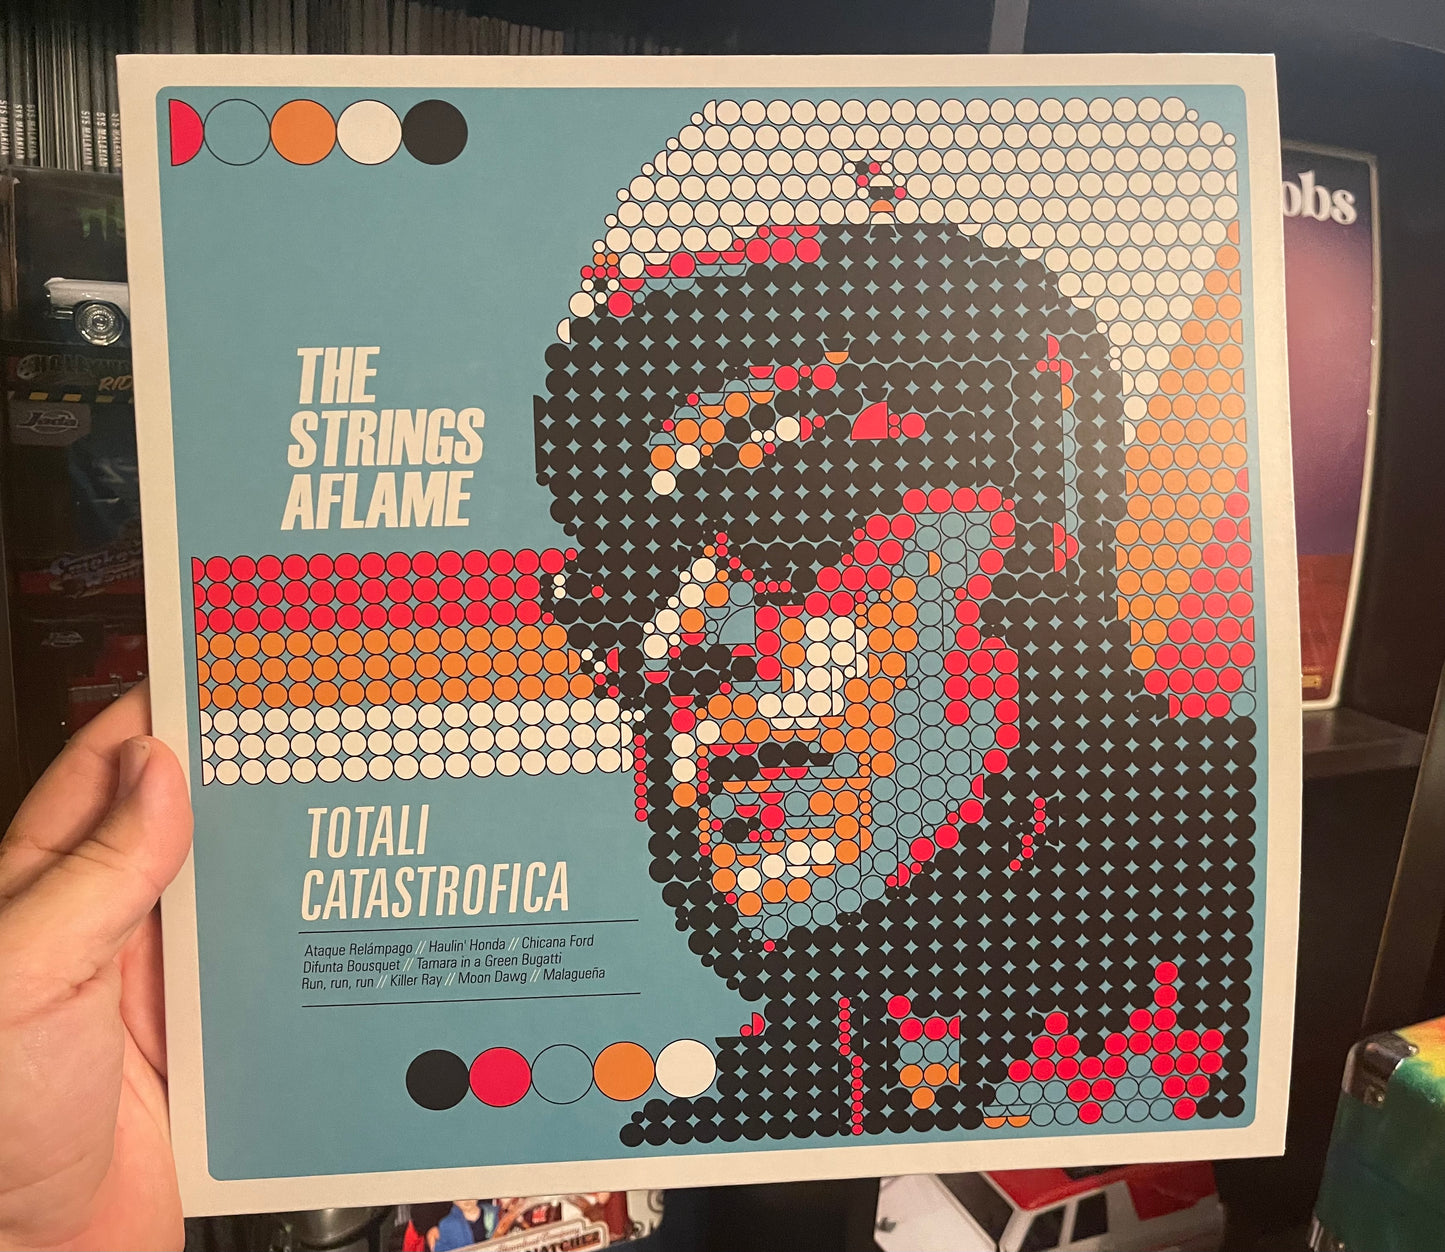 OMR-090 The Strings Aflame “Totali Catastrofica” CD/Vinyl